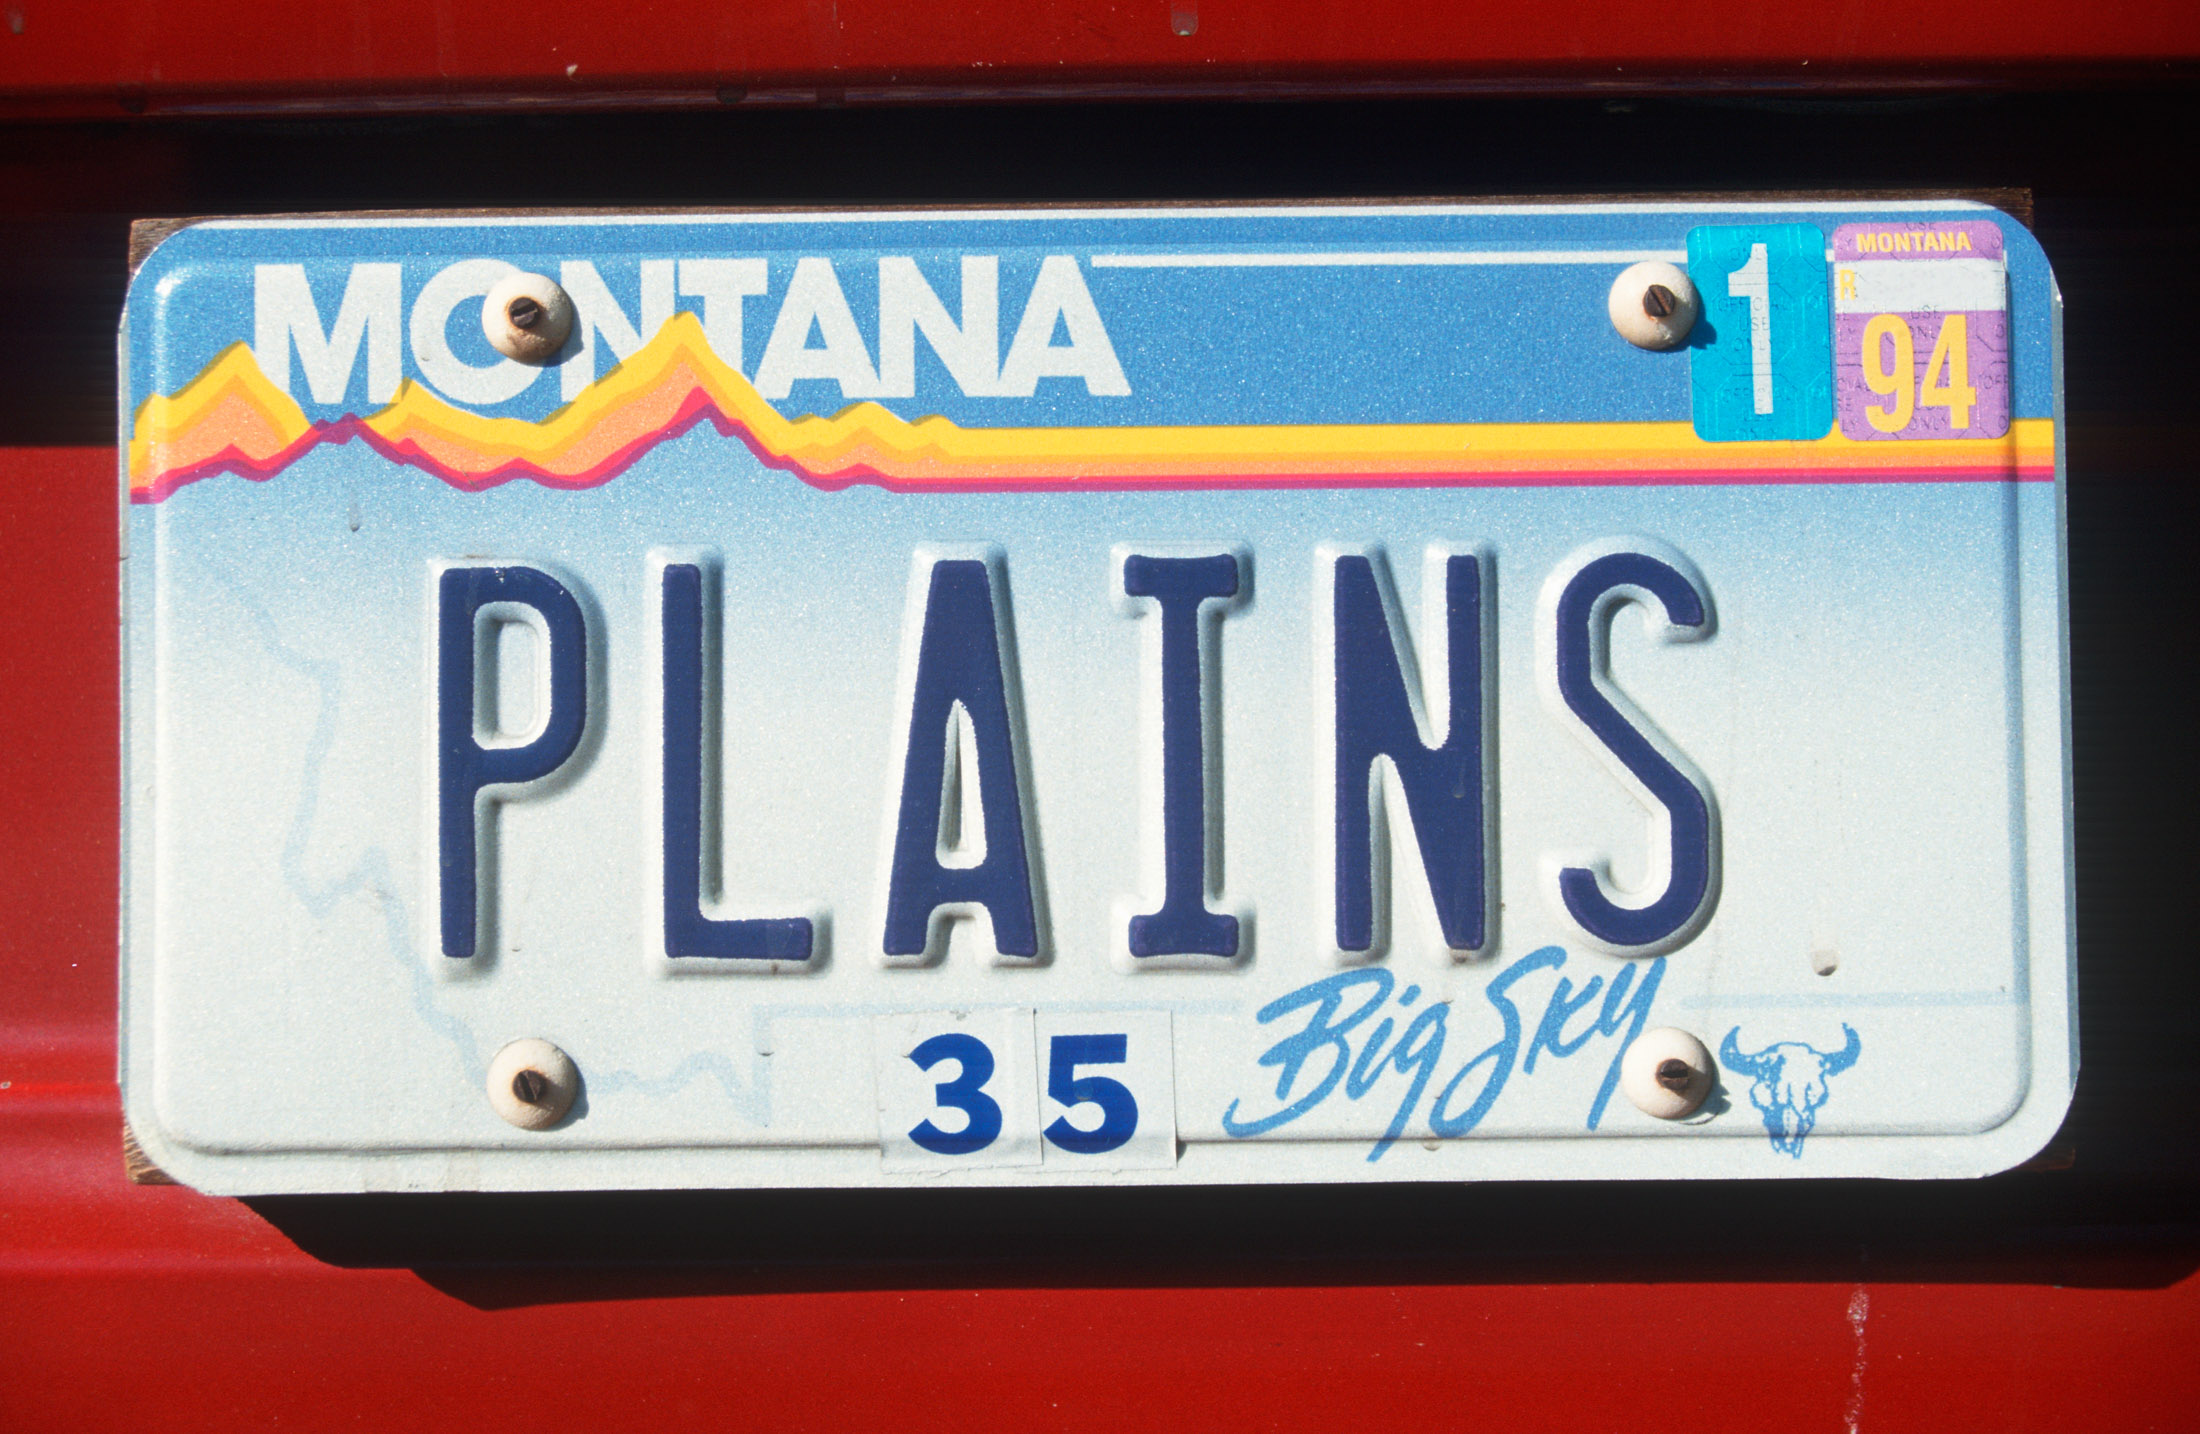 A Montana vanity license plate.&nbsp;